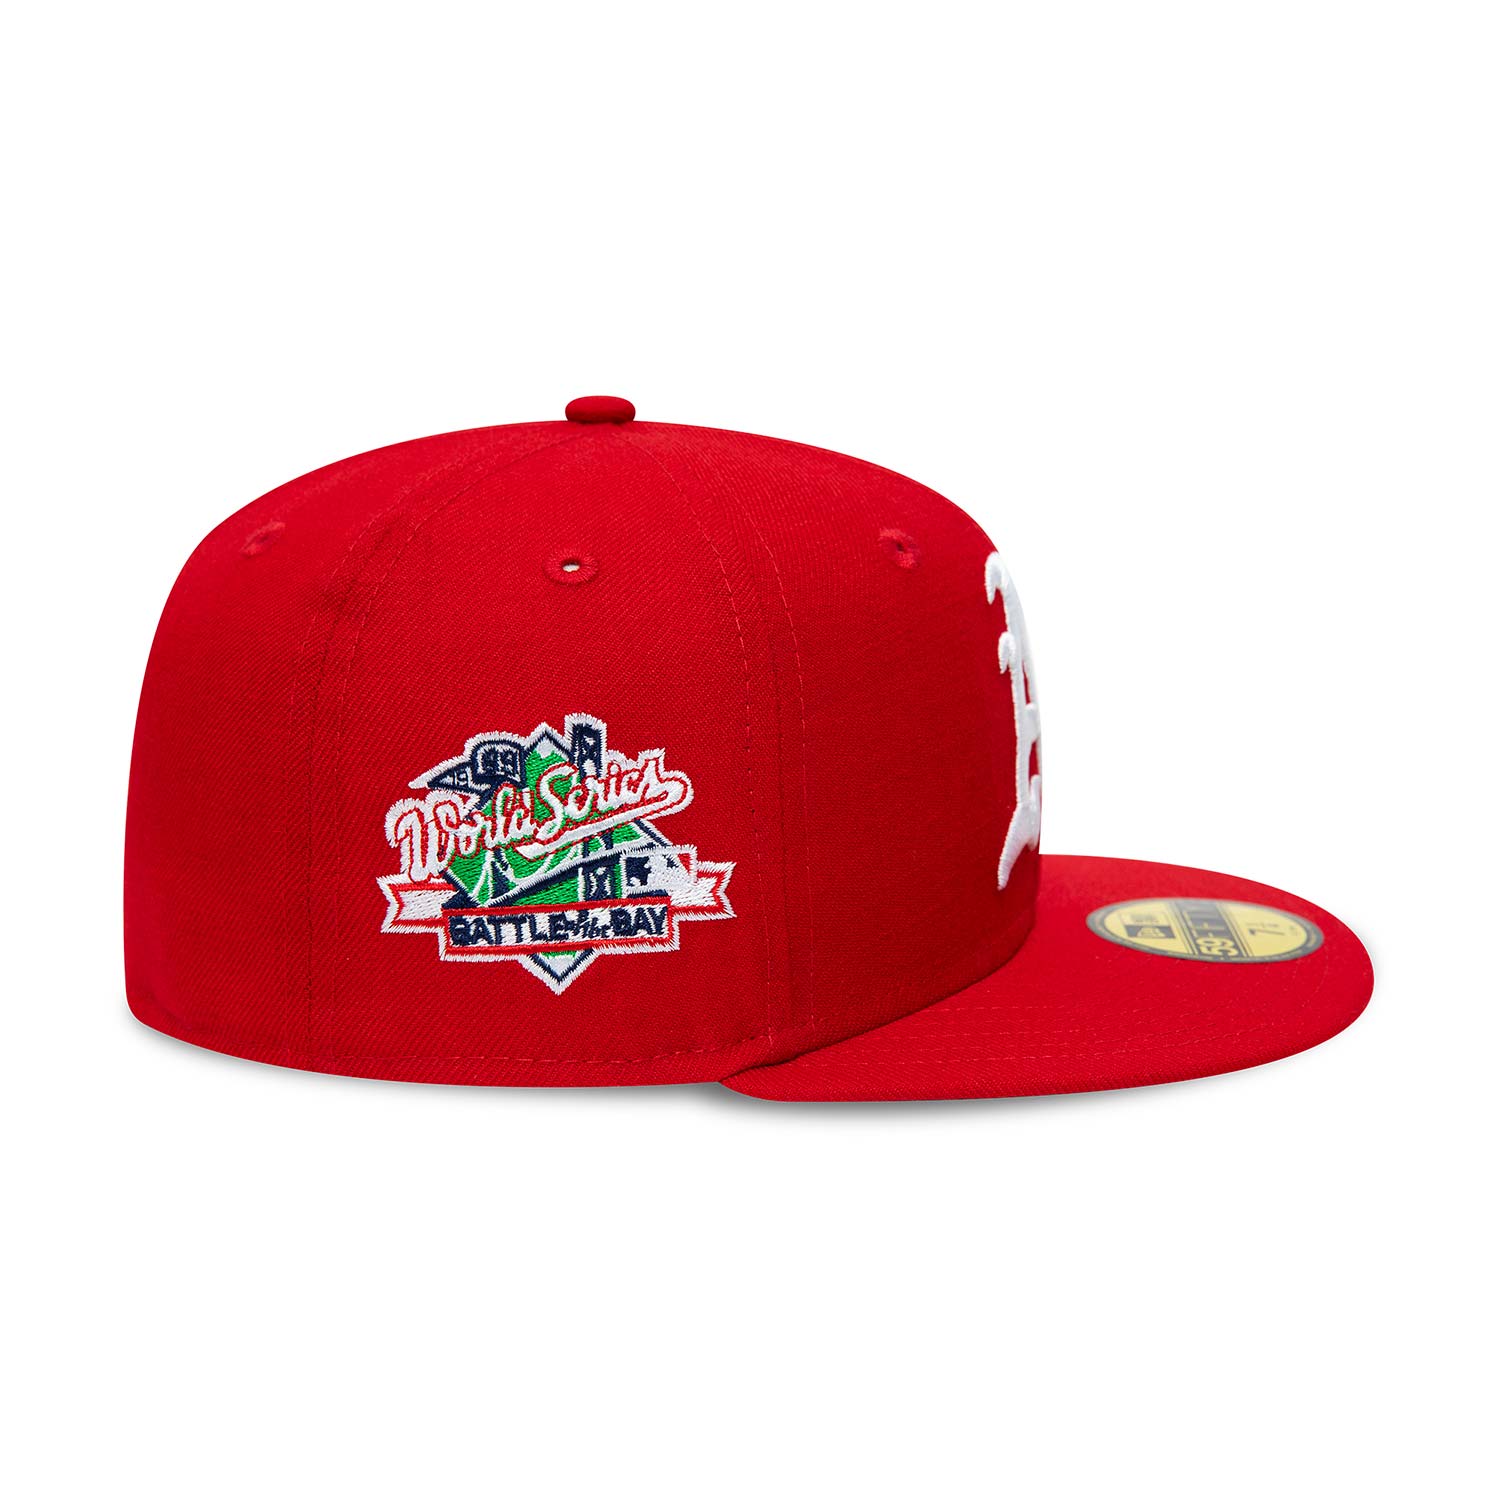 Official New Era Oakland Athletics Red 59FIFTY Cap B8597_14 B8597_14 ...